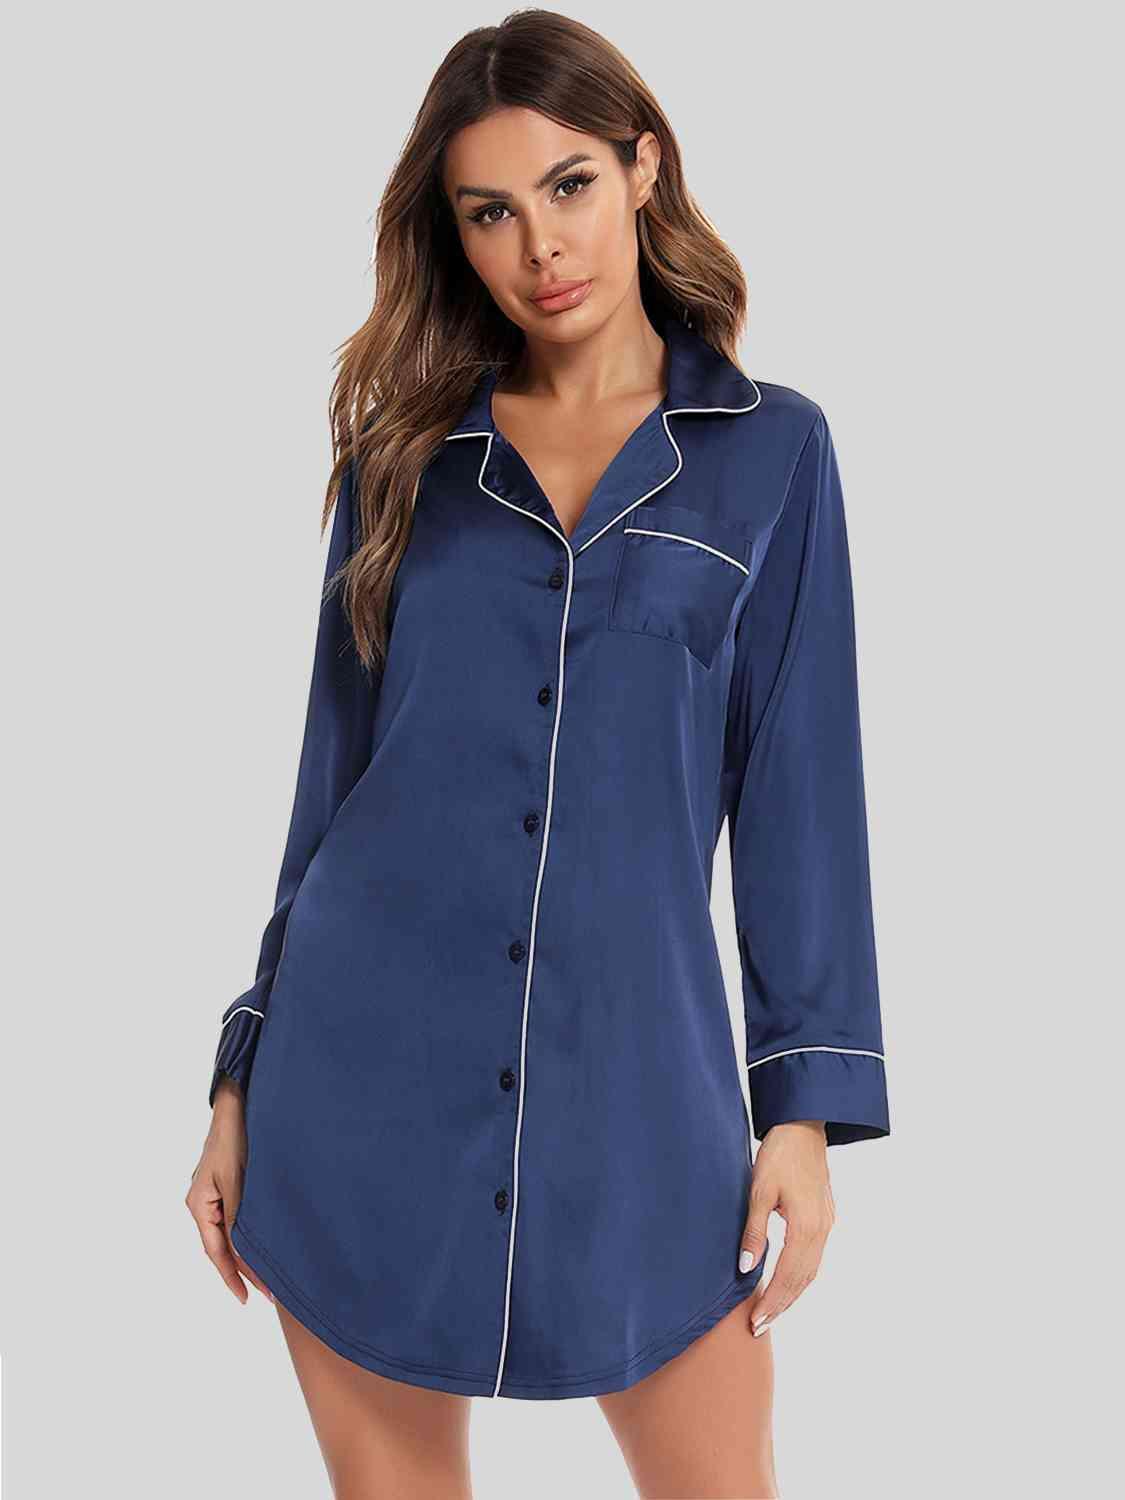 Bona Fide Fashion - Button Up Lapel Collar Night Dress with Pocket - Women Fashion - Bona Fide Fashion